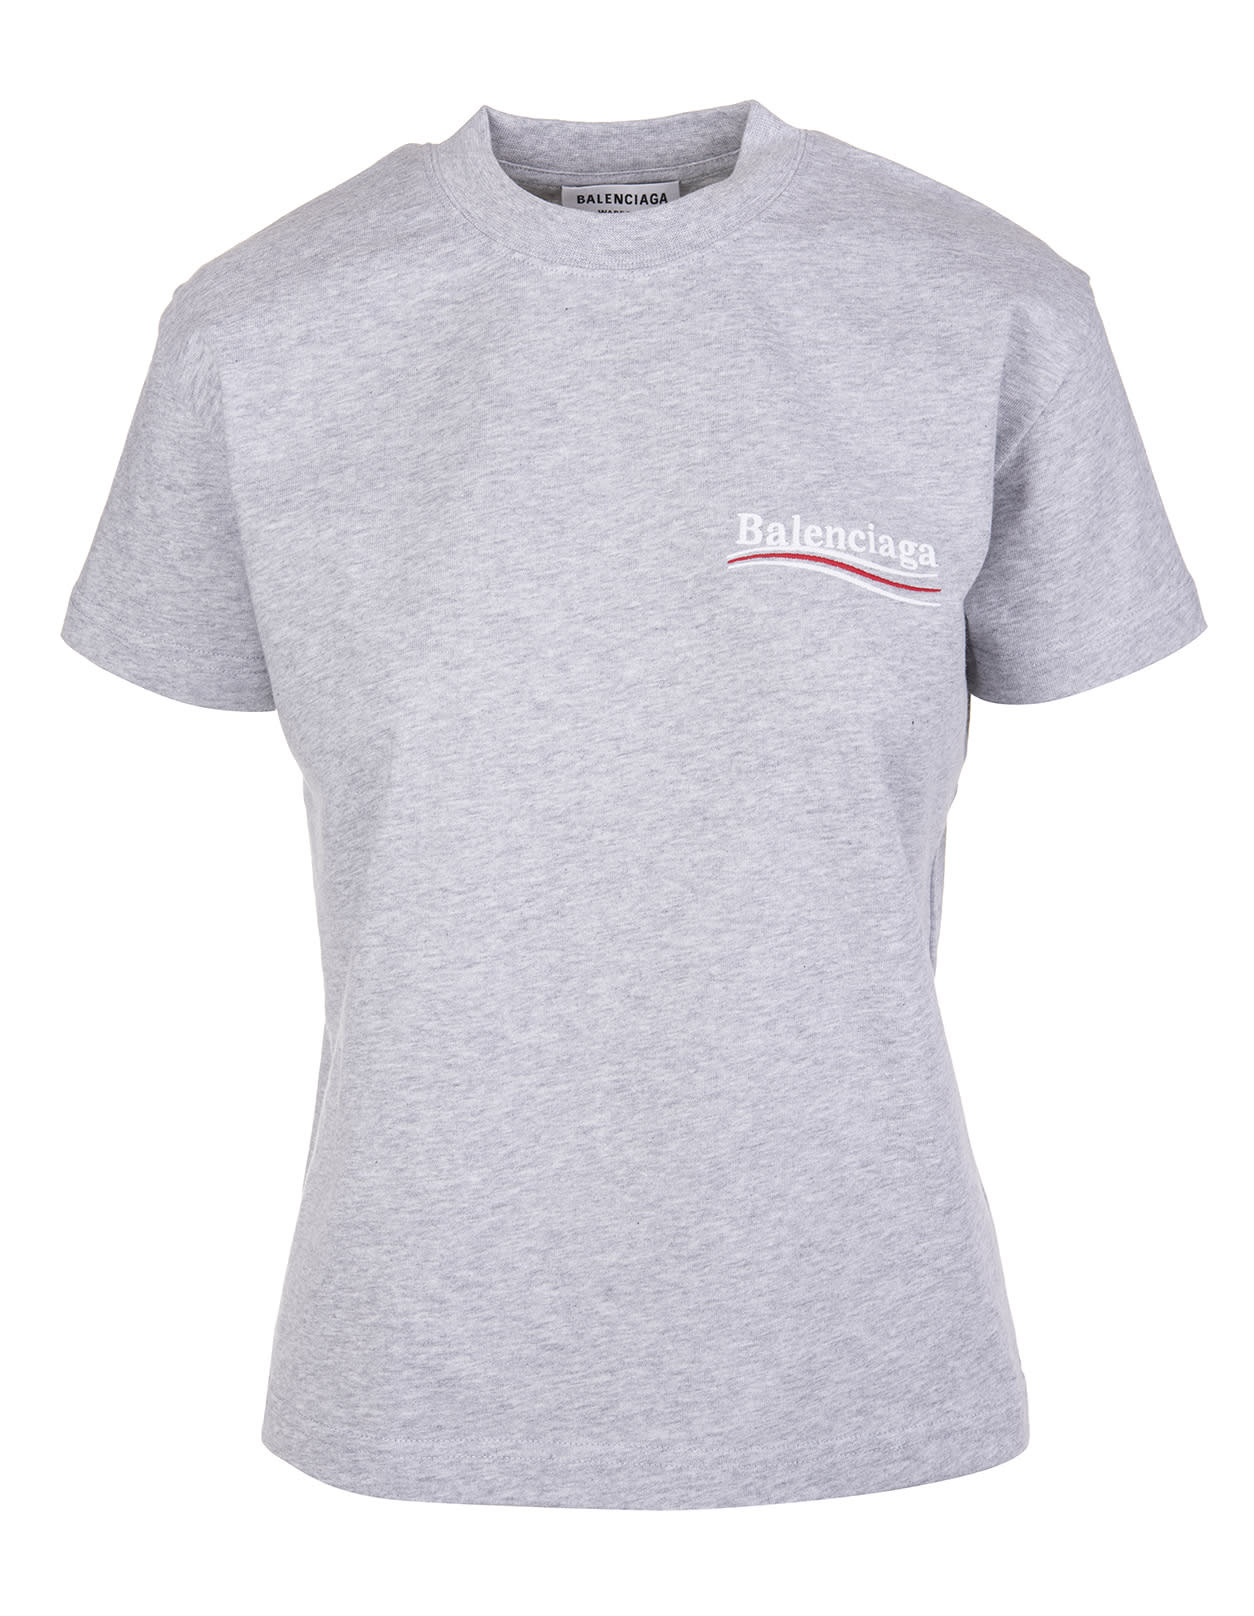 Balenciaga Woman Grey Slim Fit Political Campaign T-shirt